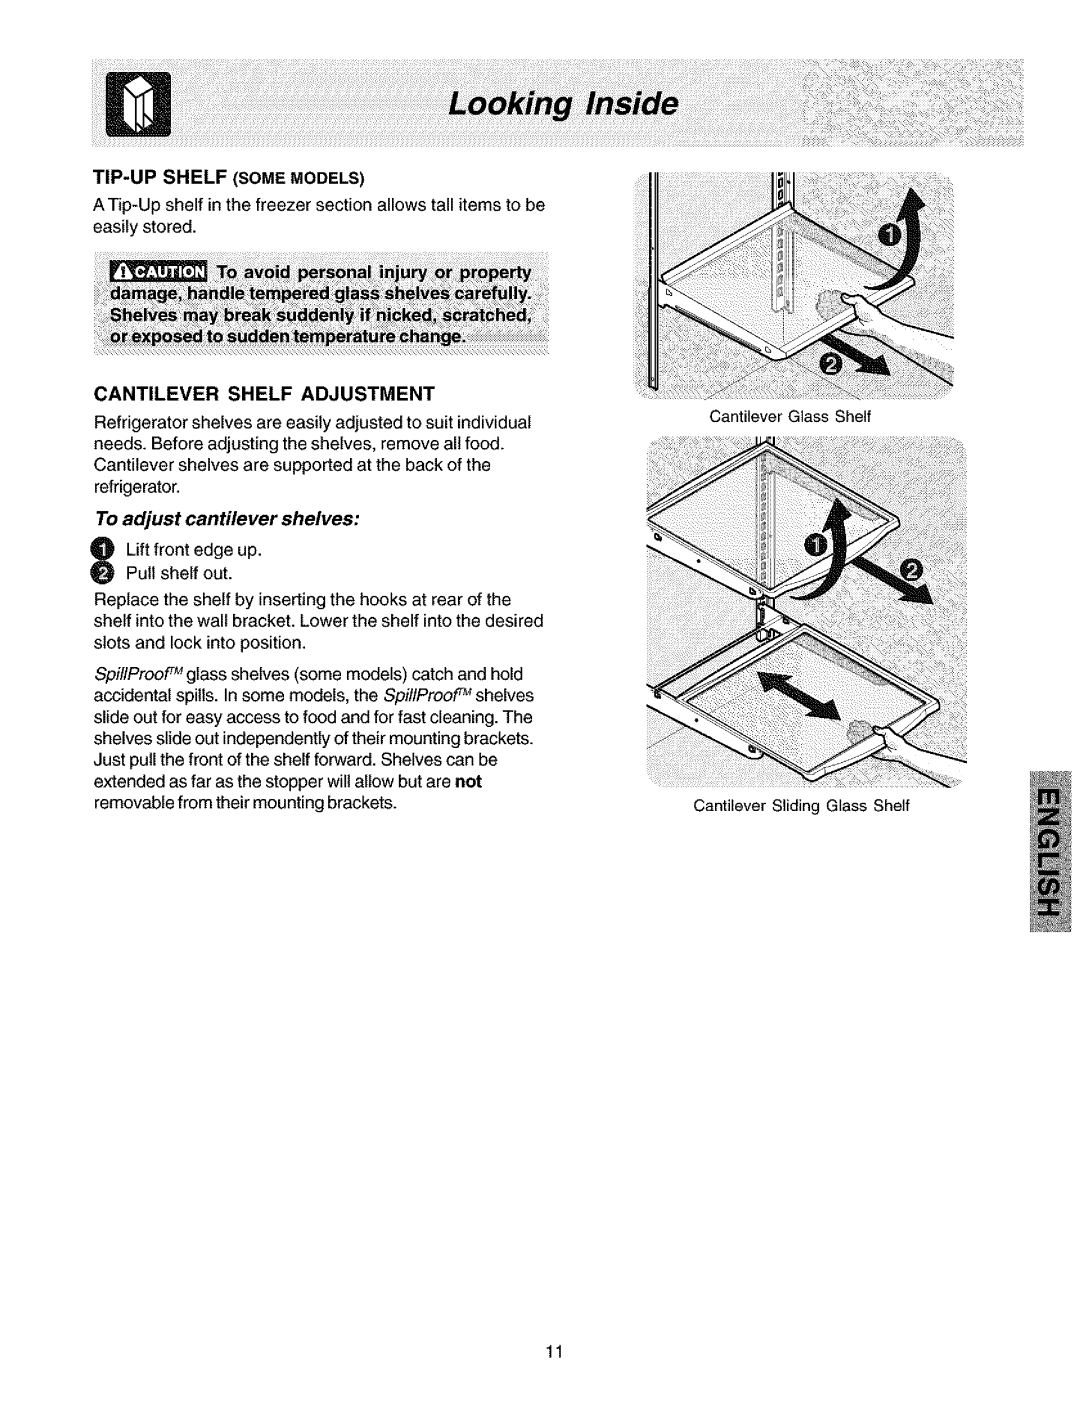 Kenmore 240461405, 25352334202 manual Tip-Upshelf Some Models, Cantilever Shelf Adjustment, TO adjust cantilever shelves 